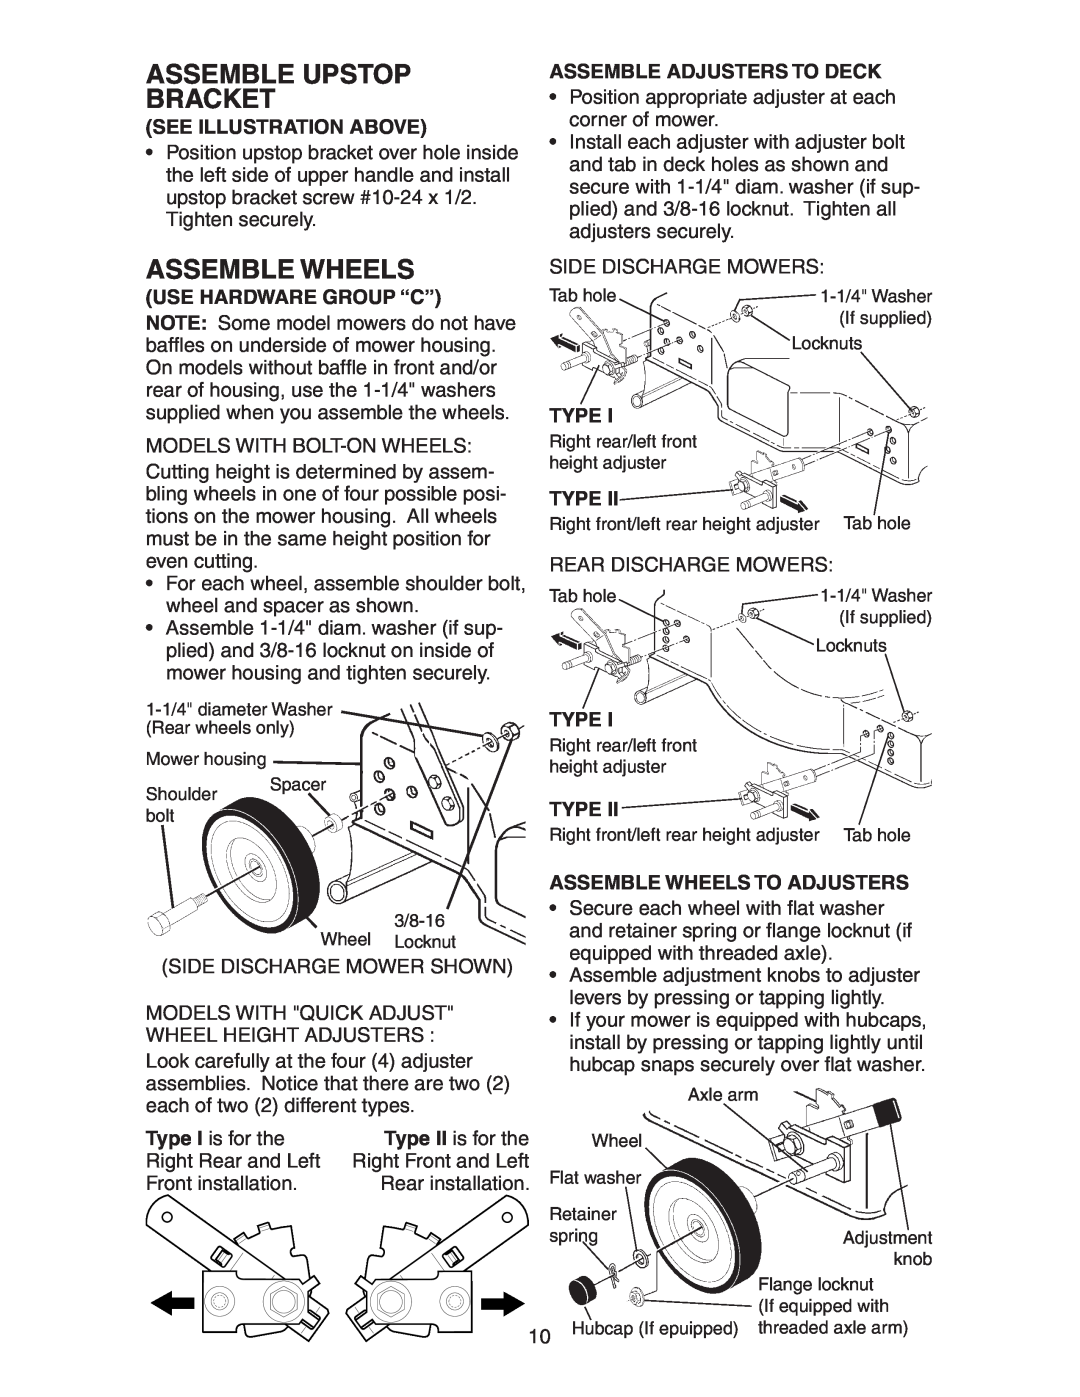 Poulan 193747 manual Assemble Upstop Bracket, Assemble Wheels, See Illustration Above, Use Hardware Group “C”, Type 